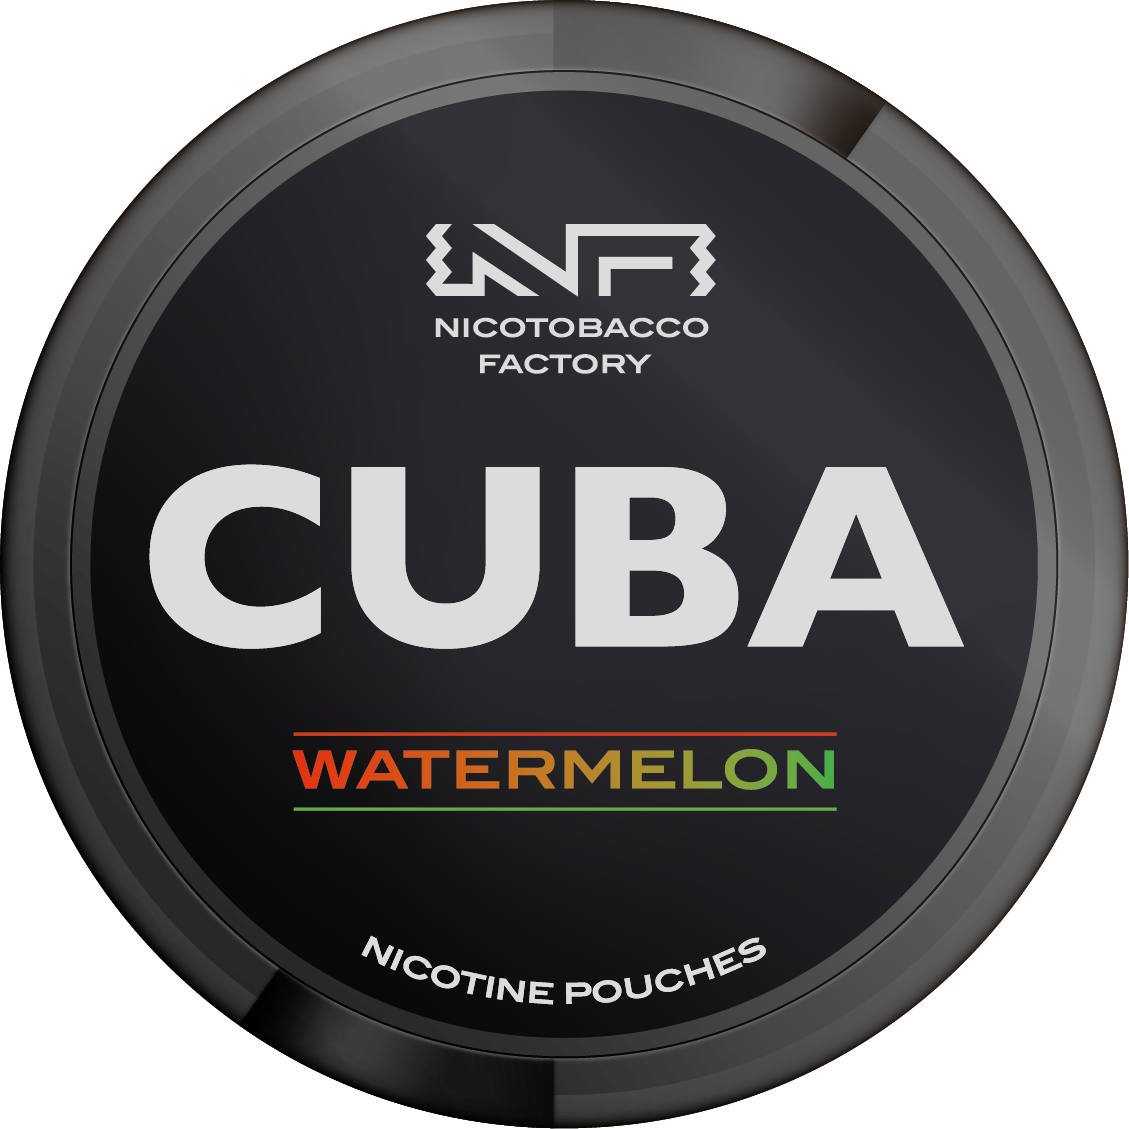 Black Watermelon Nicotine Pouches By Cuba